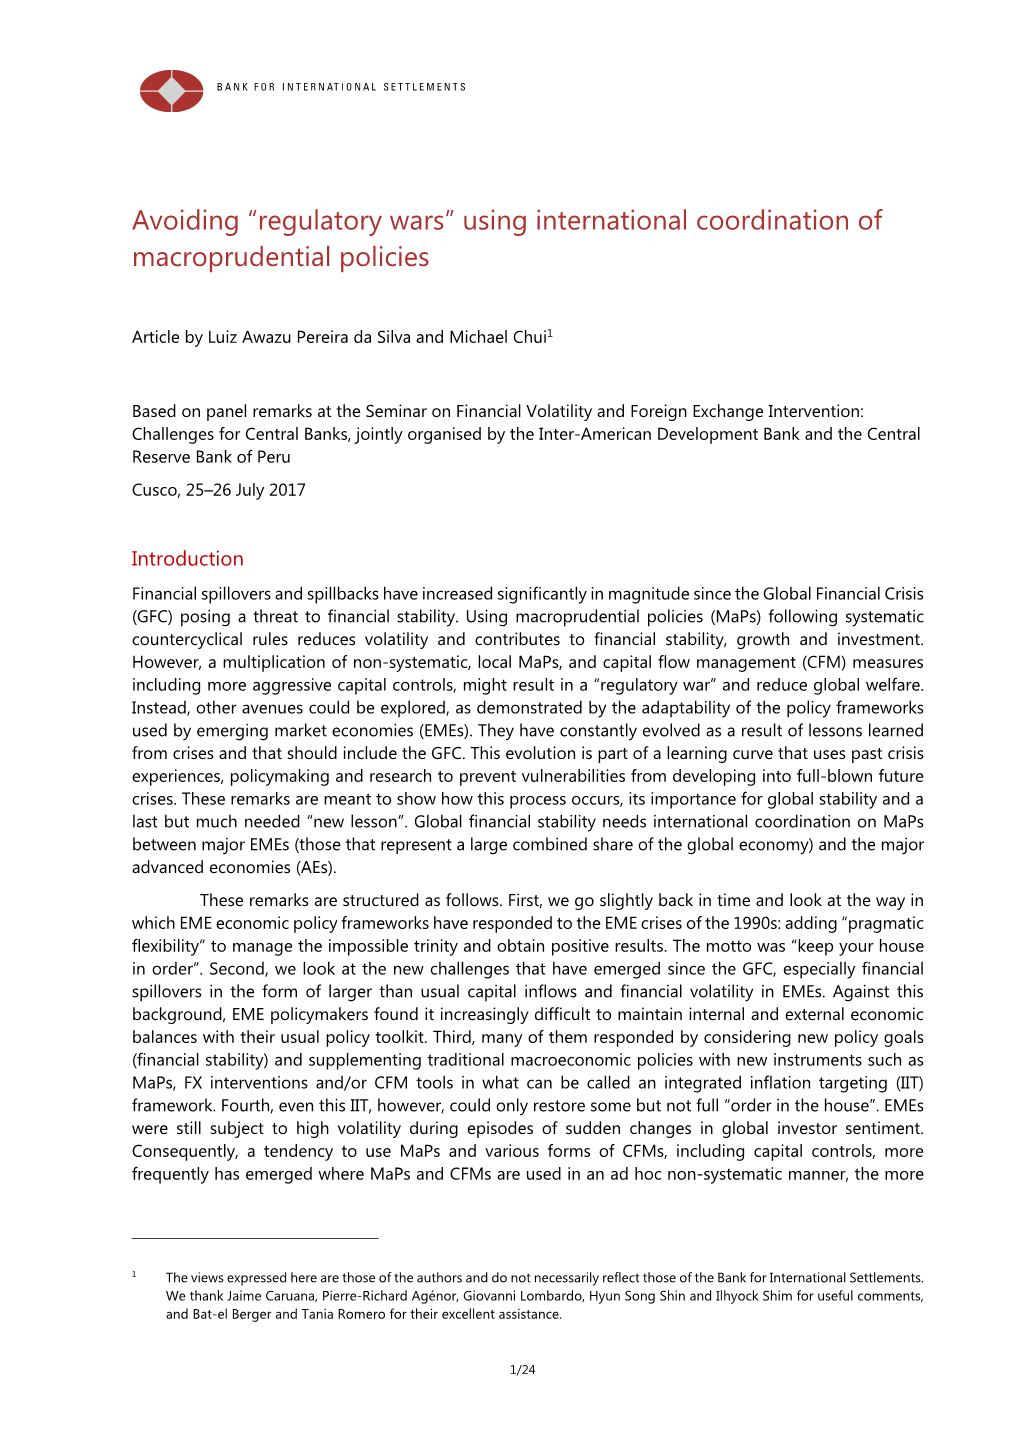 Avoiding “Regulatory Wars” Using International Coordination of Macroprudential Policies